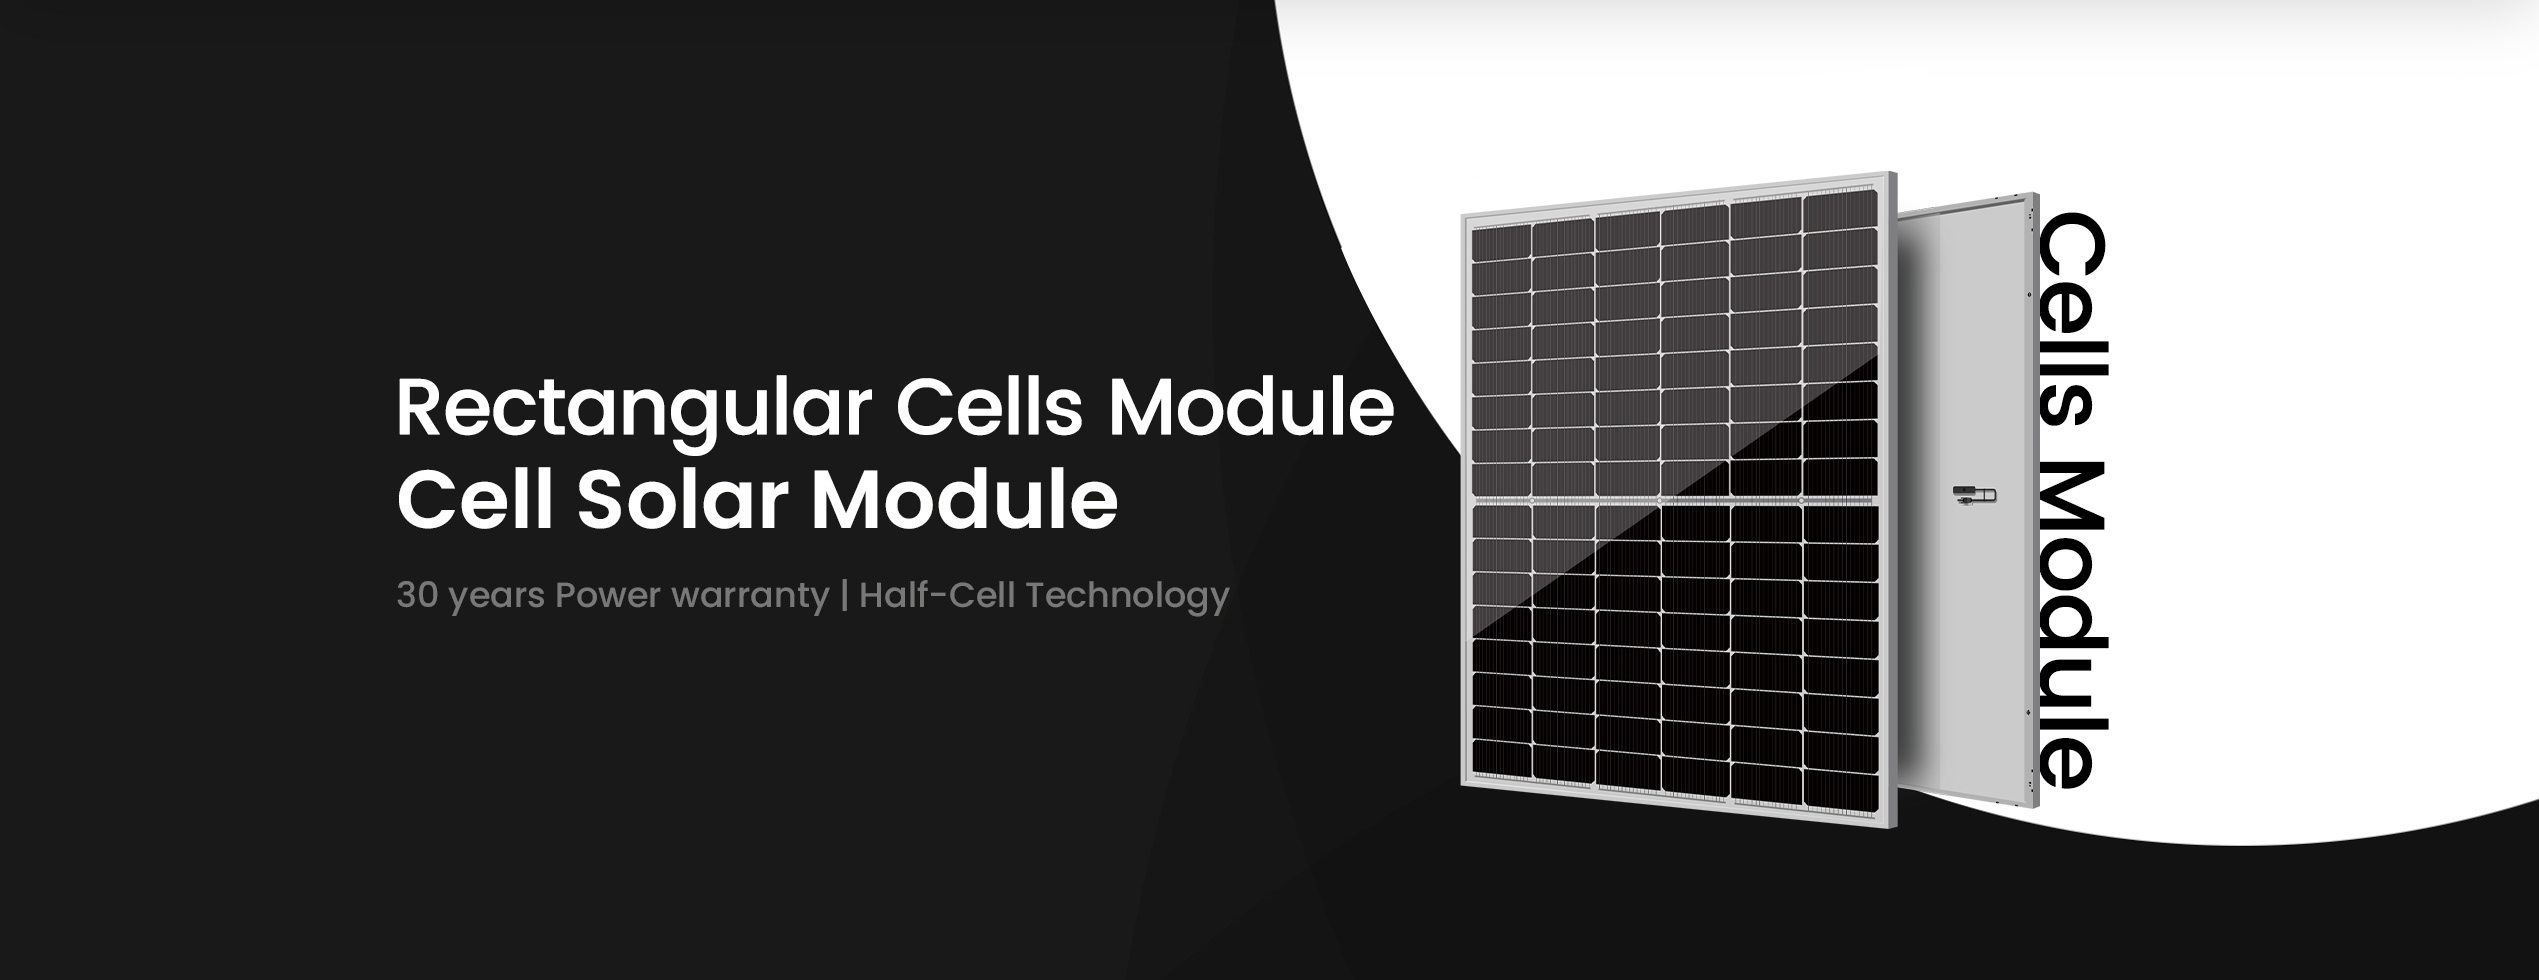 Rectangular Cells Module